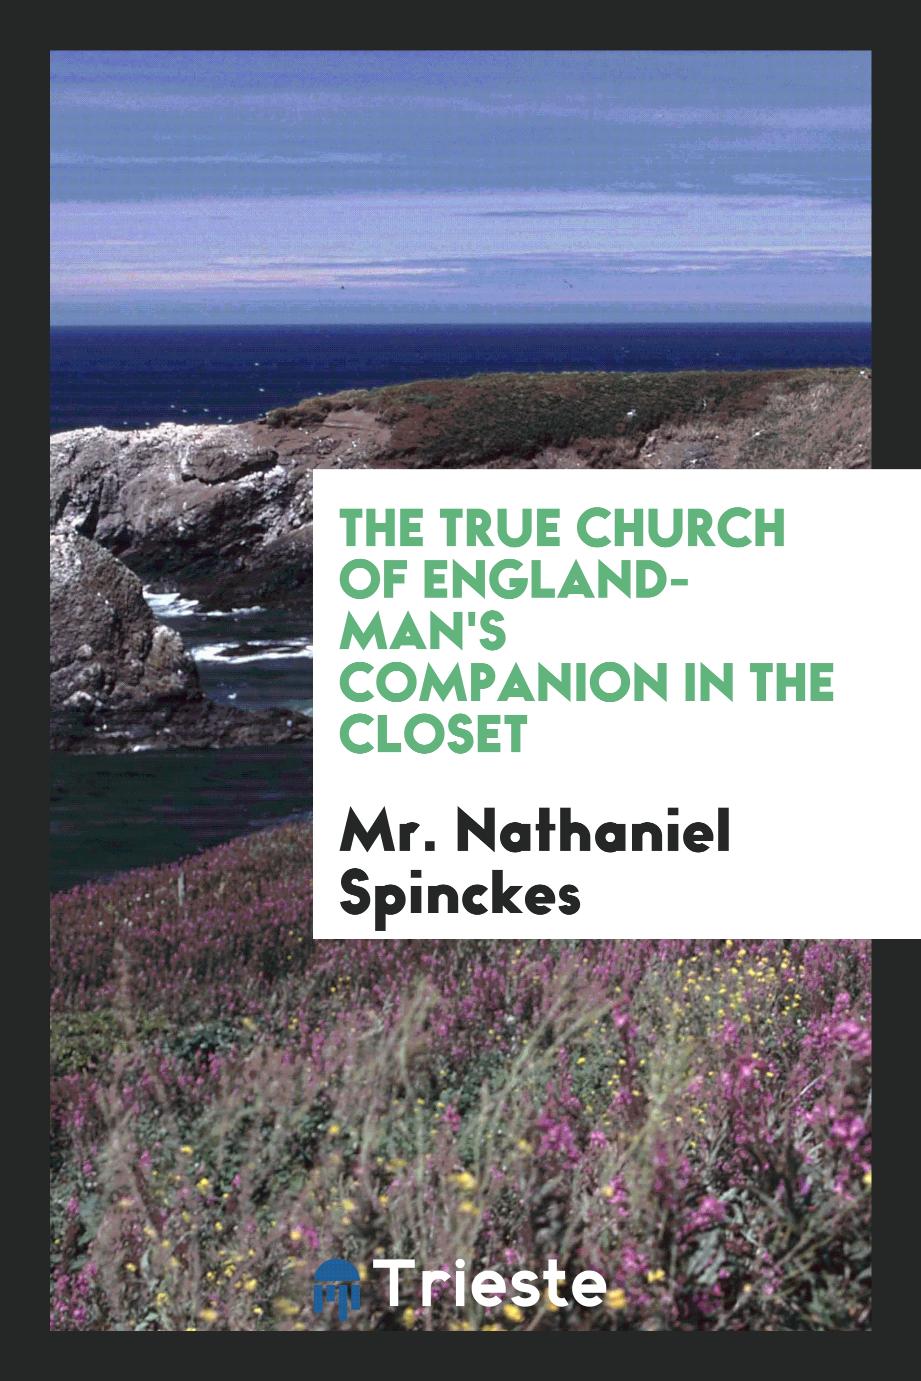 Mr. Nathaniel Spinckes - The True Church of England-man's companion in the closet